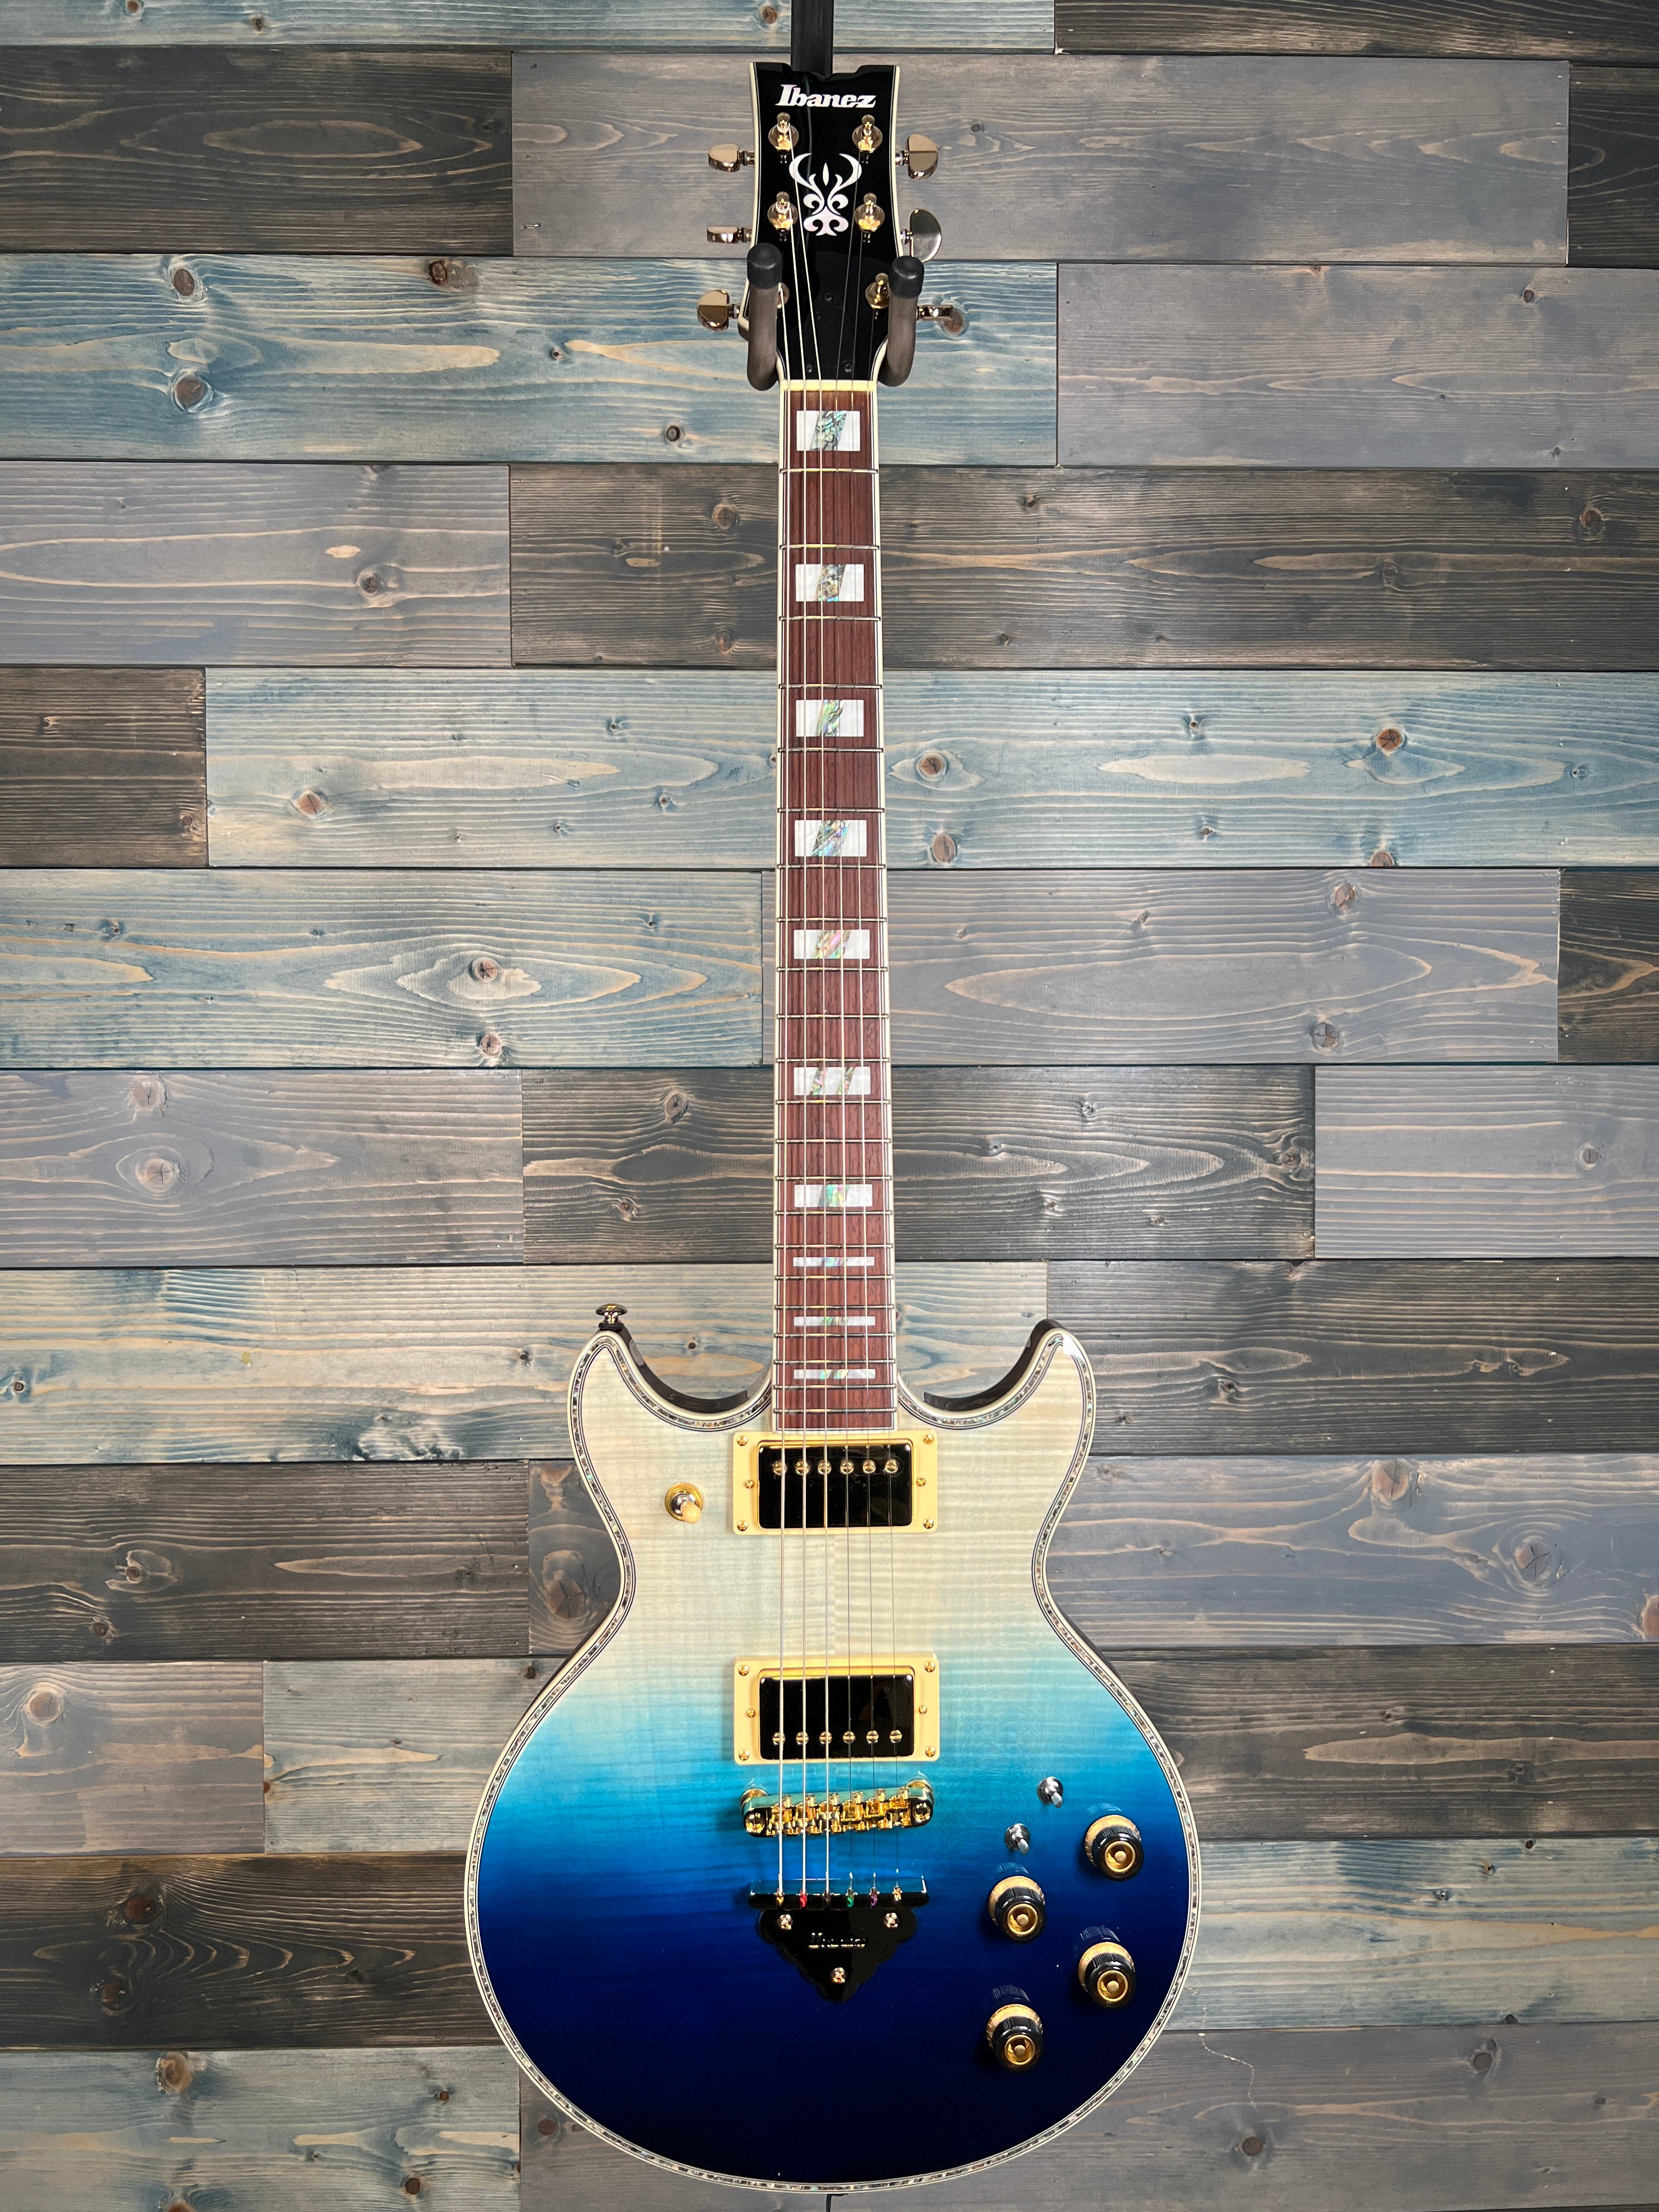 Ibanez AR420 Standard Electric Guitar  - Transparent Blue Gradation